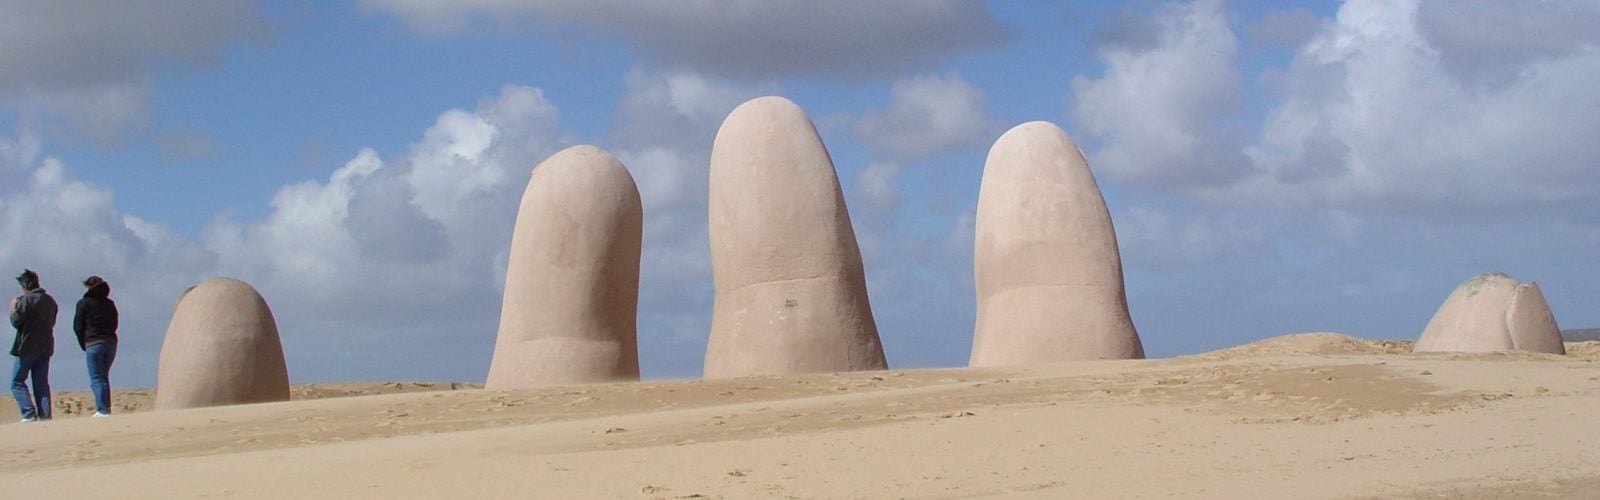 Playa Brava Monumento Mano Punta del Este, Uruguay